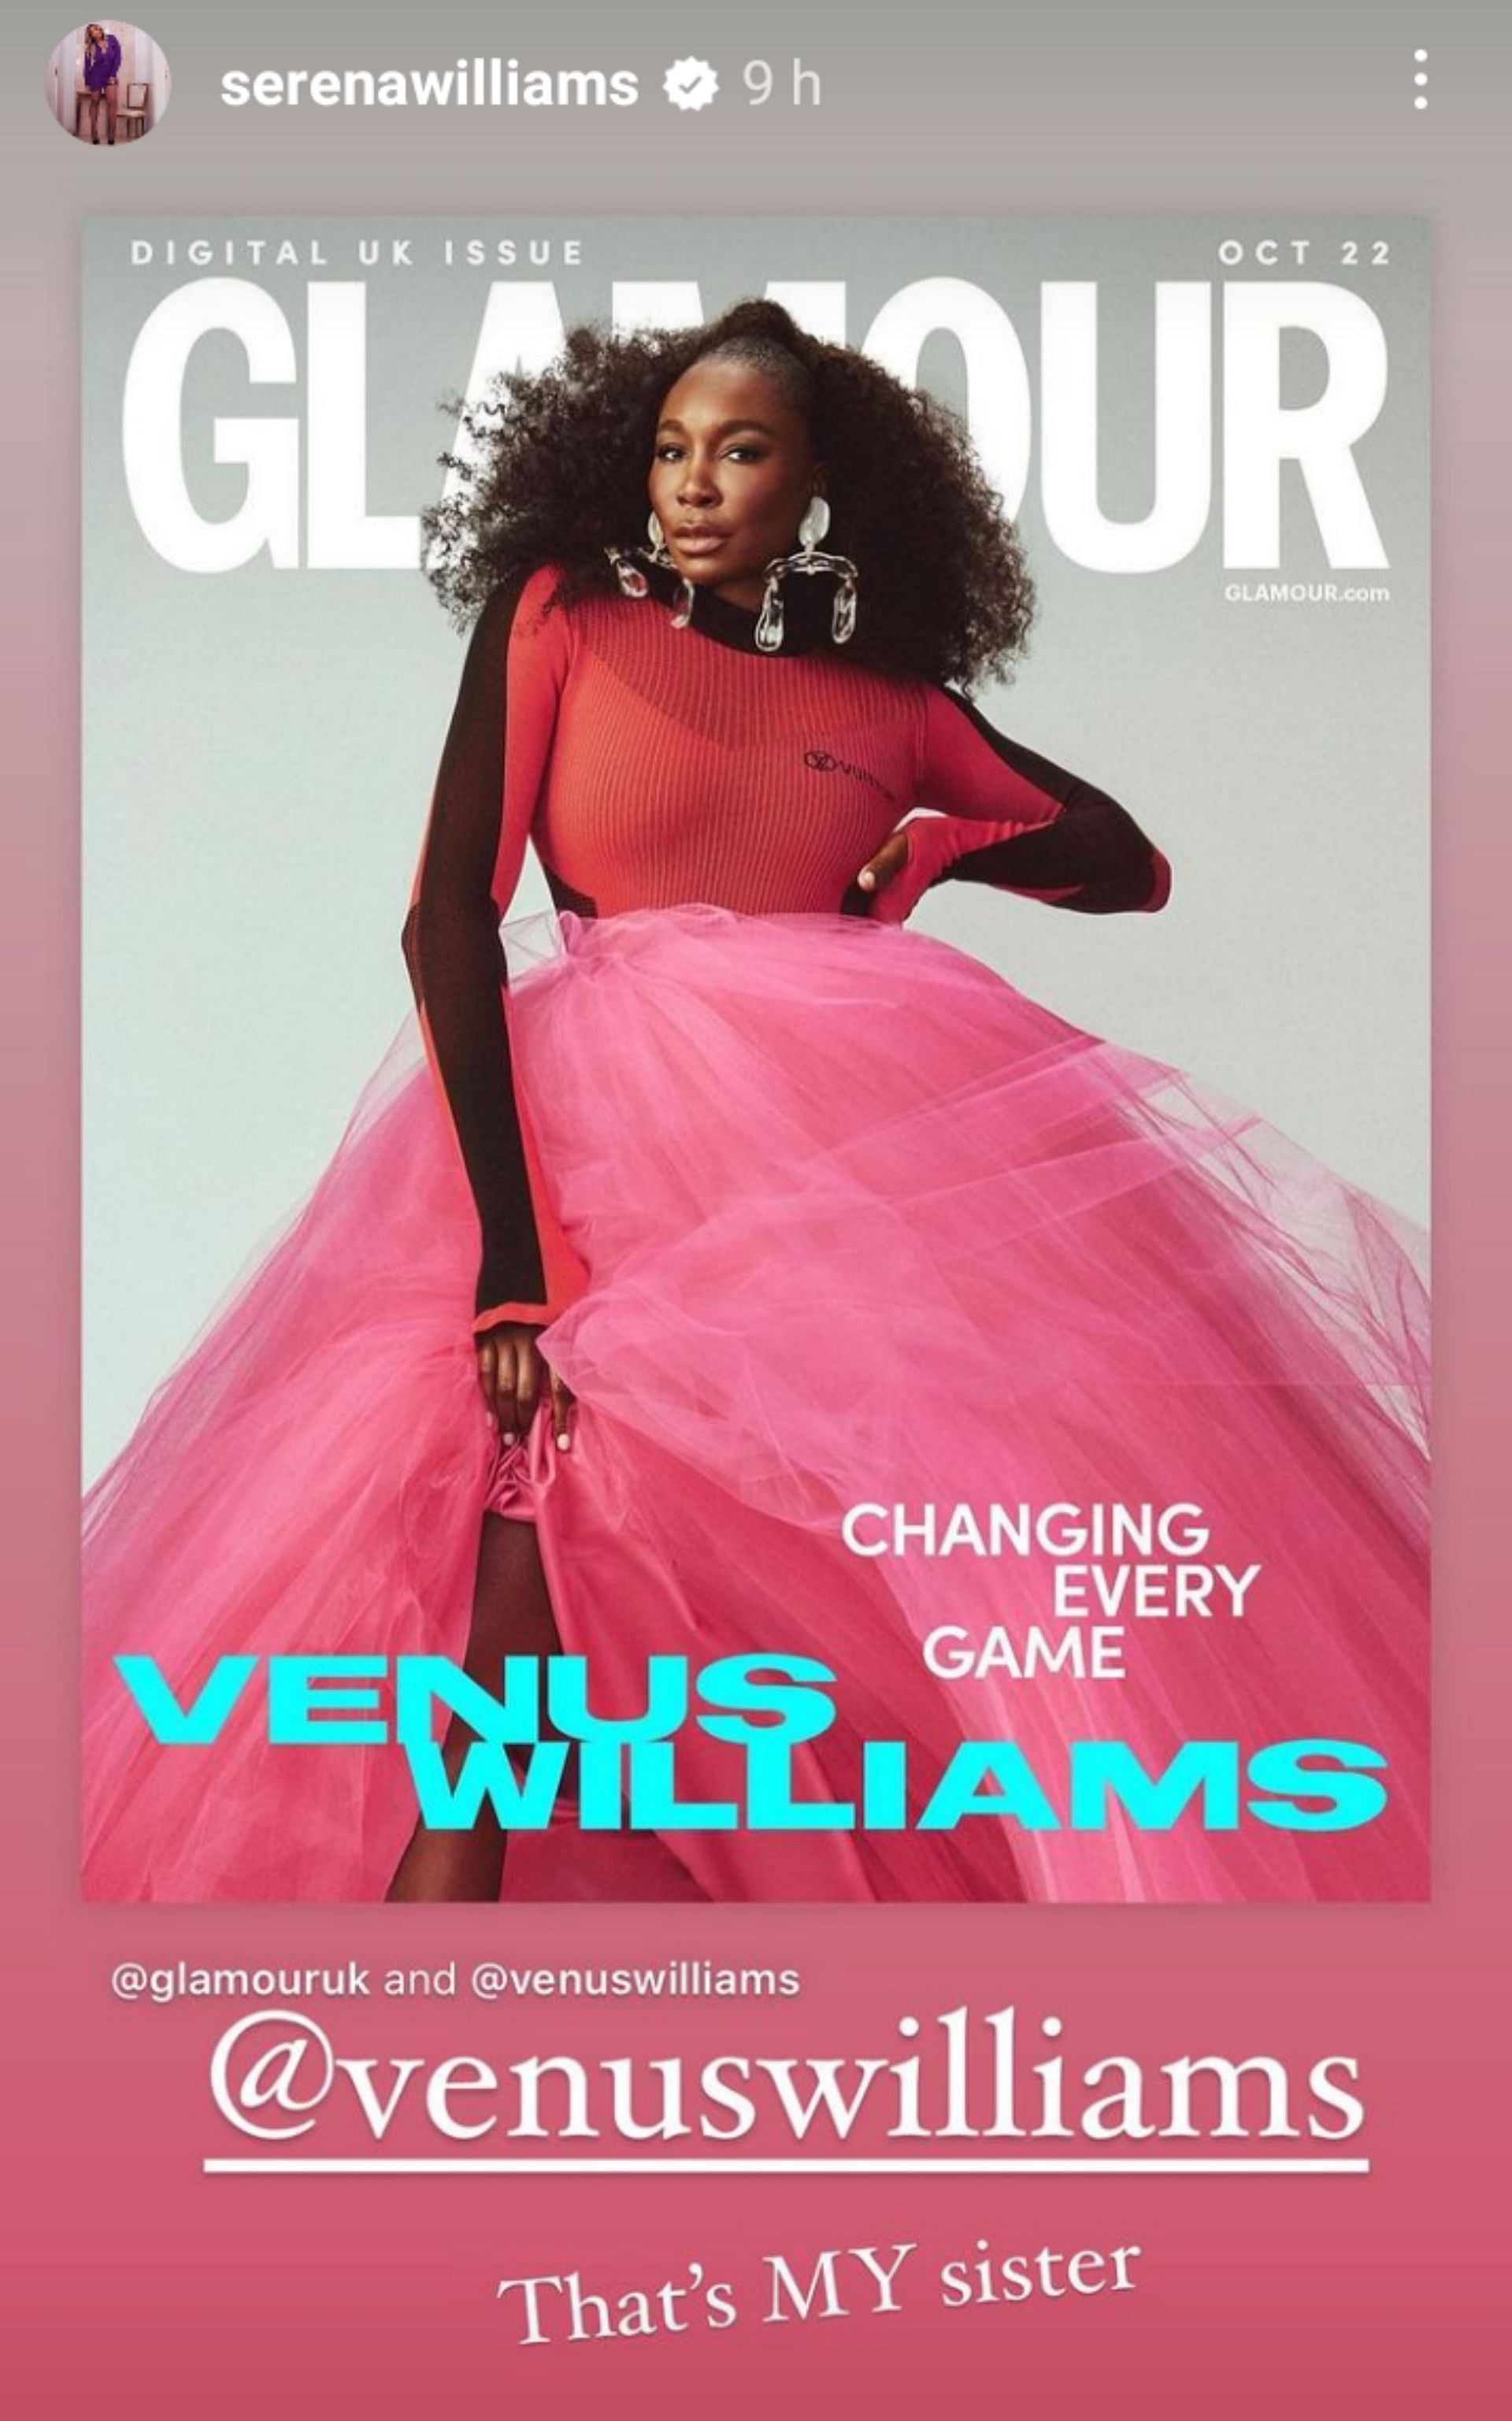 Serena Williams took to her Instagram stories to congratulate Venus Williams